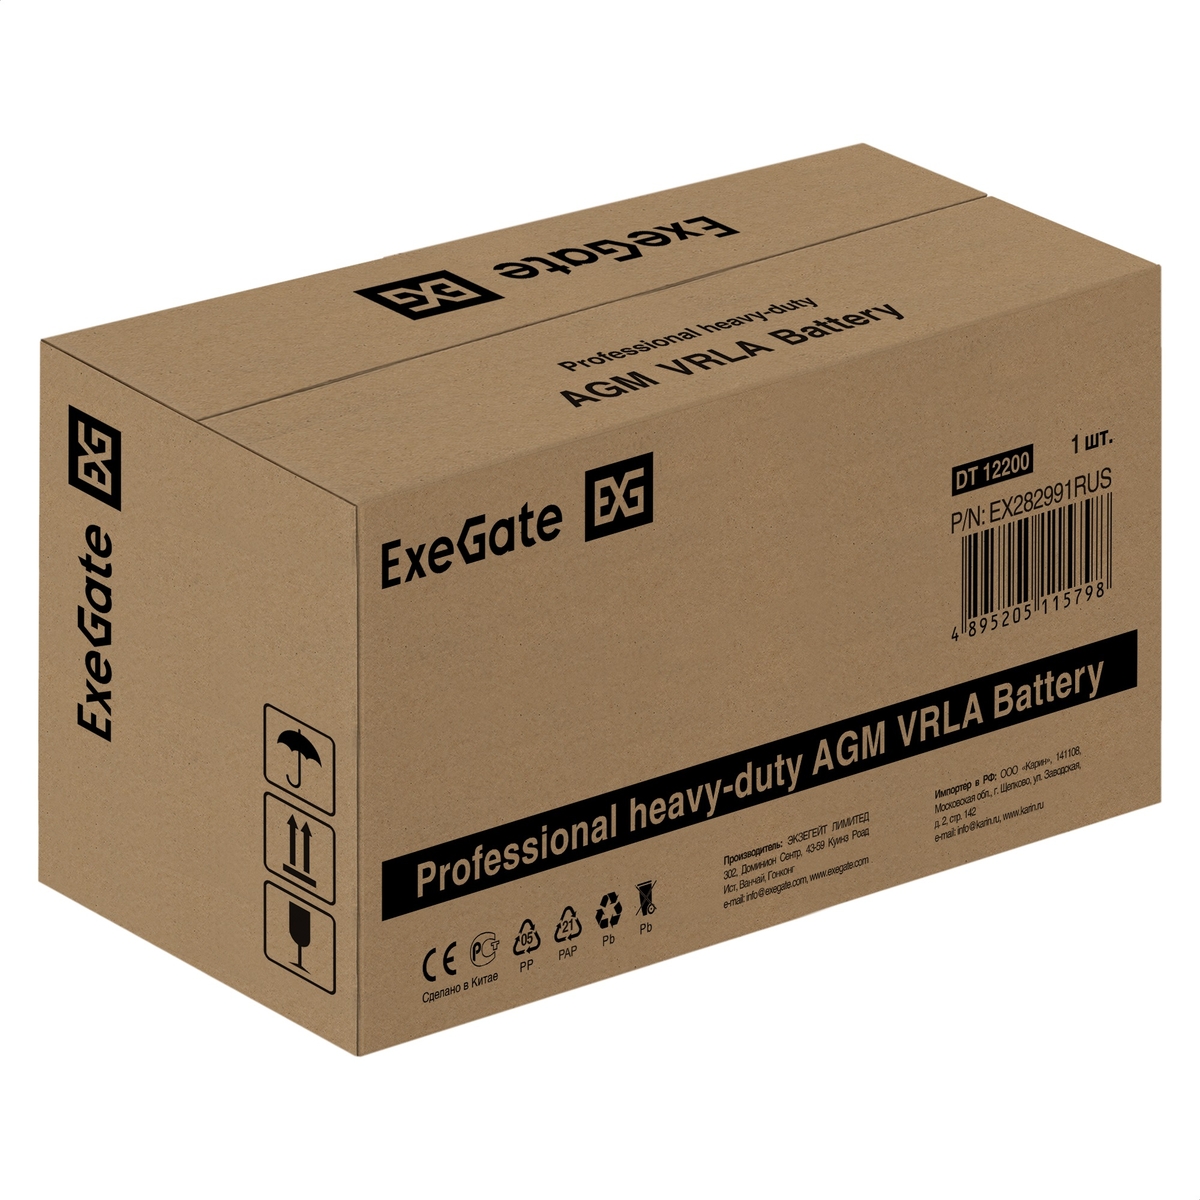 Battery ExeGate DT 12200